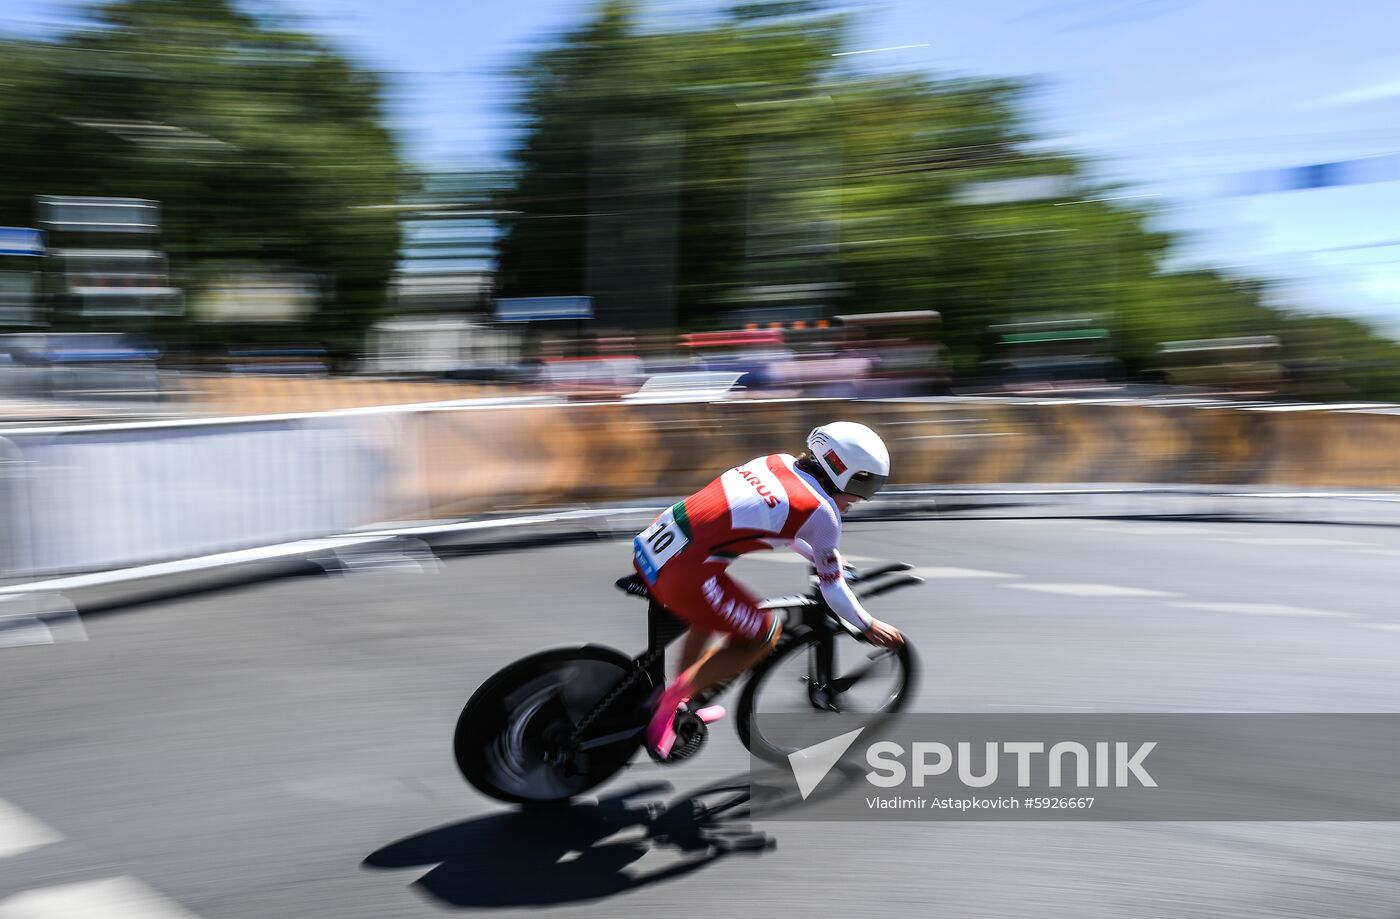 Belarus European Games Cycling